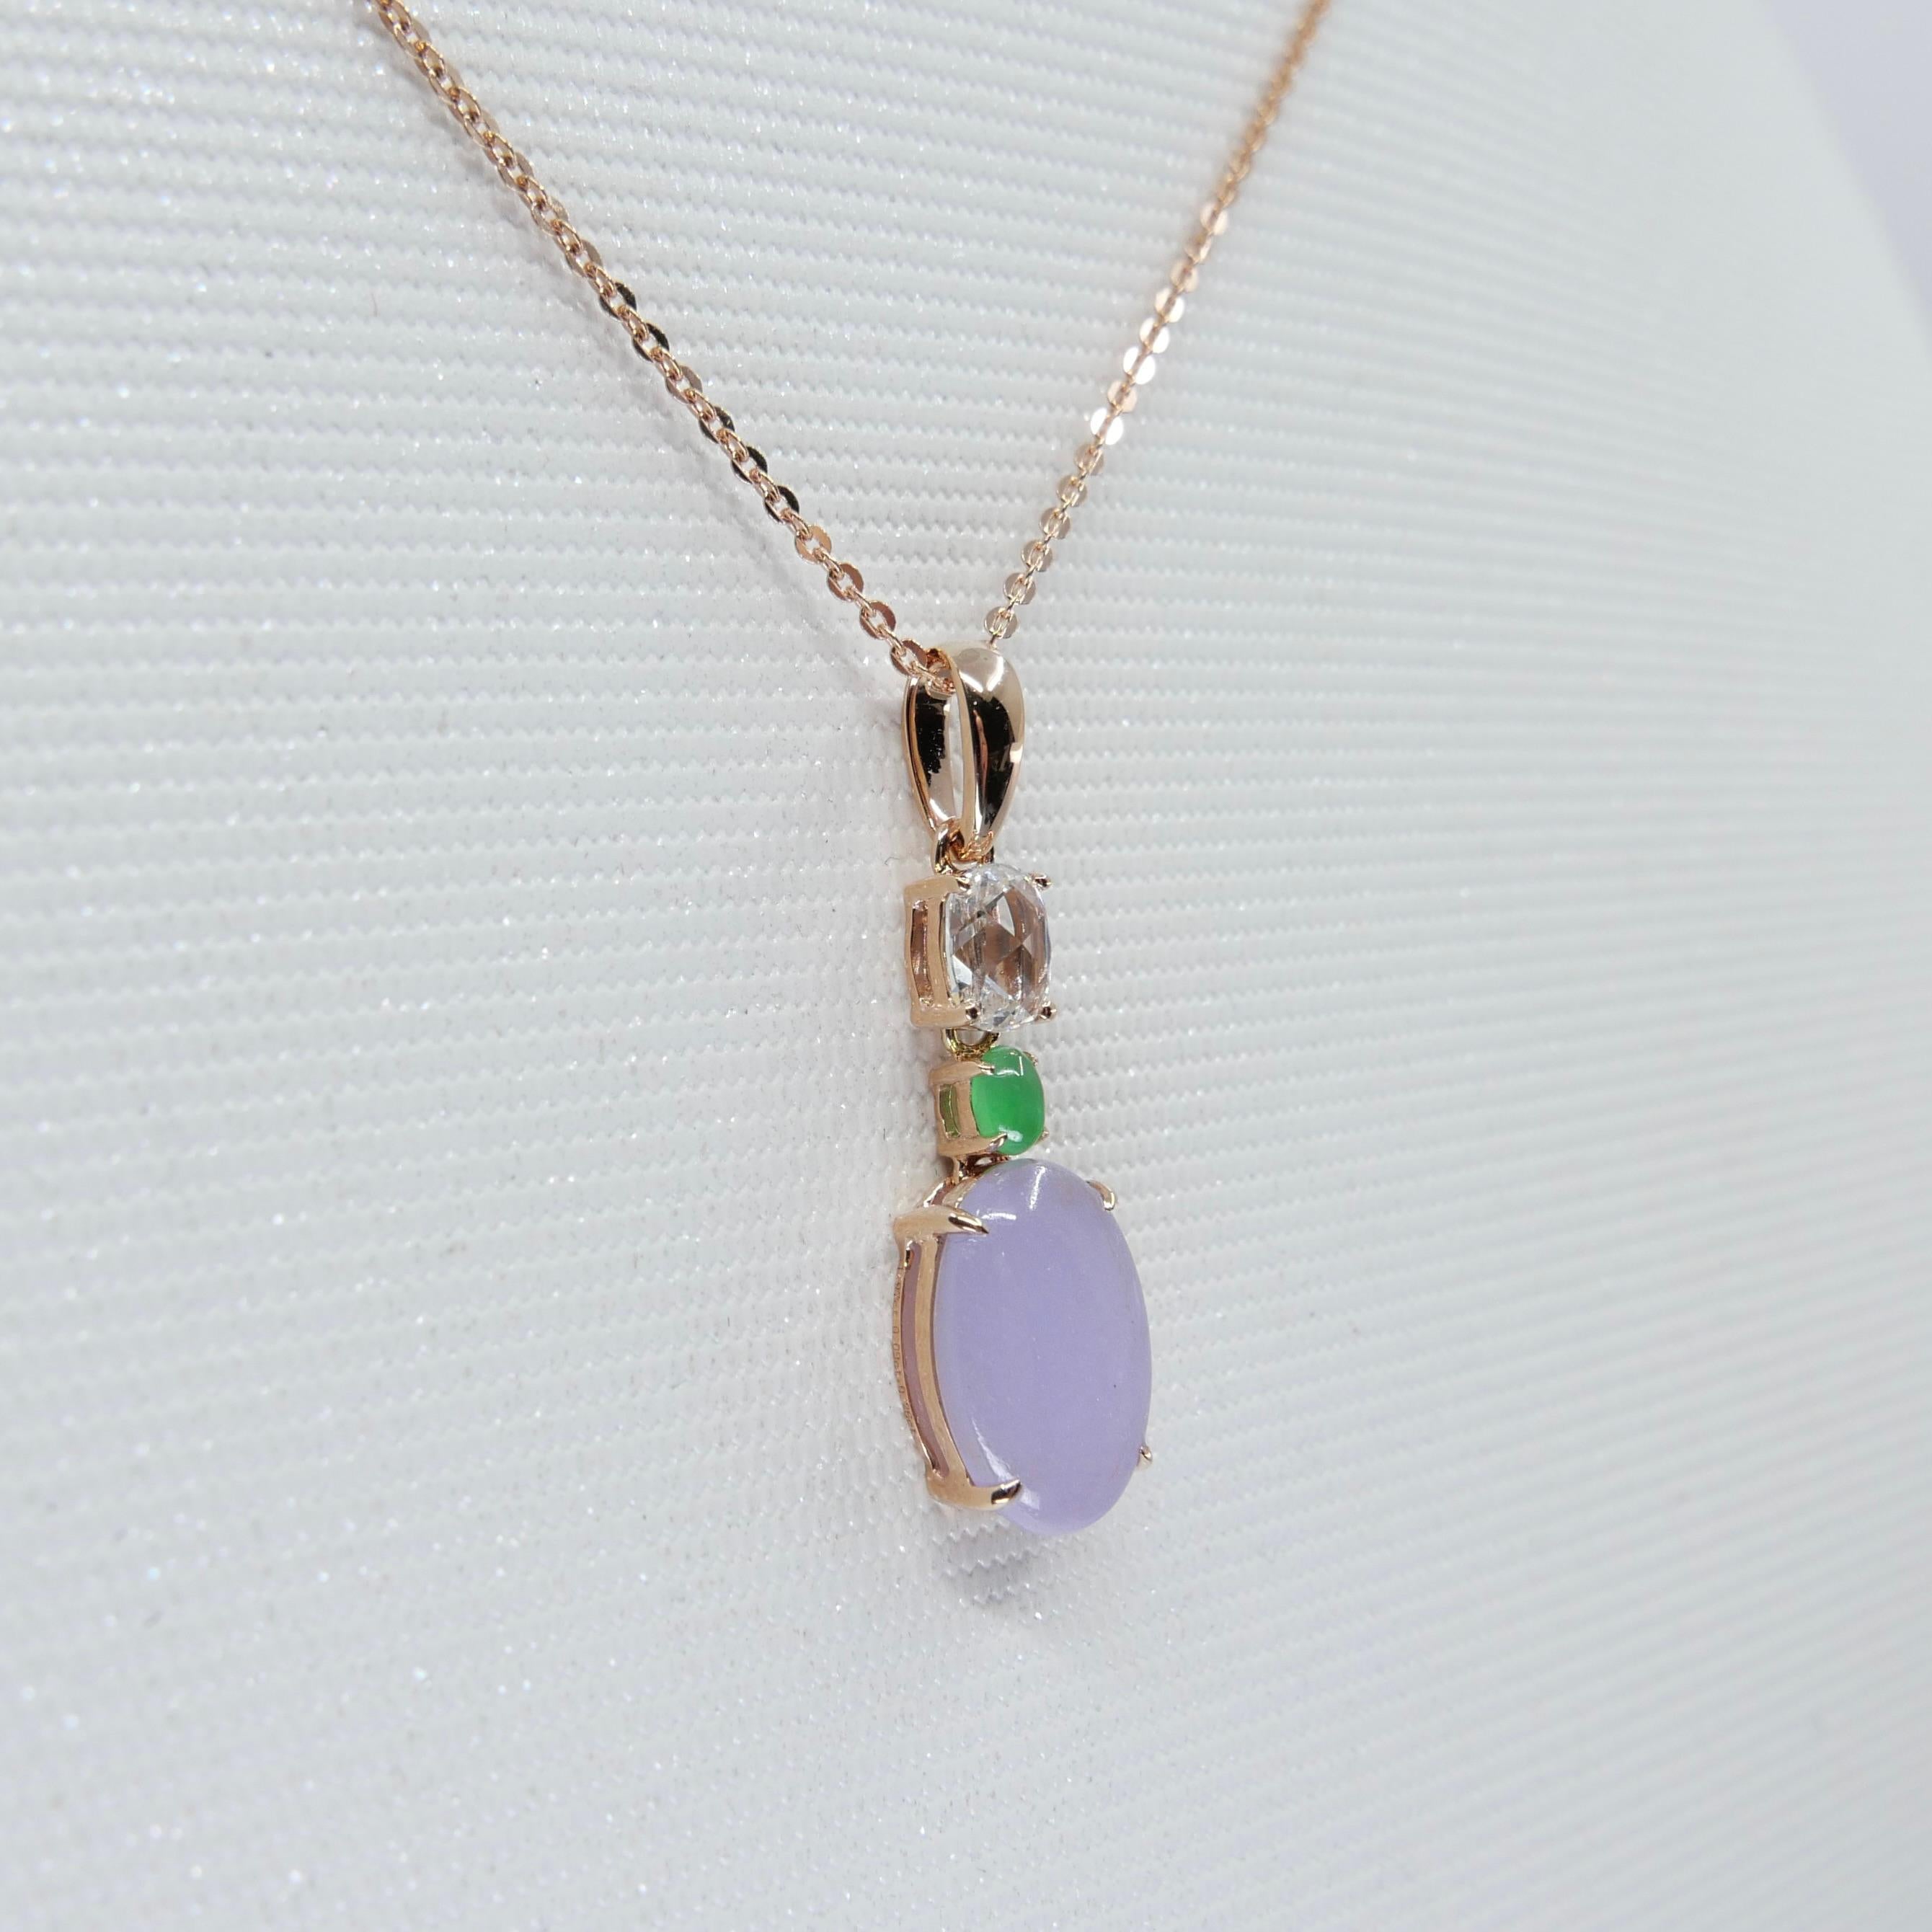 Certified 1.97Cts Lavender Jade & Rose Cut Diamond Drop Pendant Necklace For Sale 4